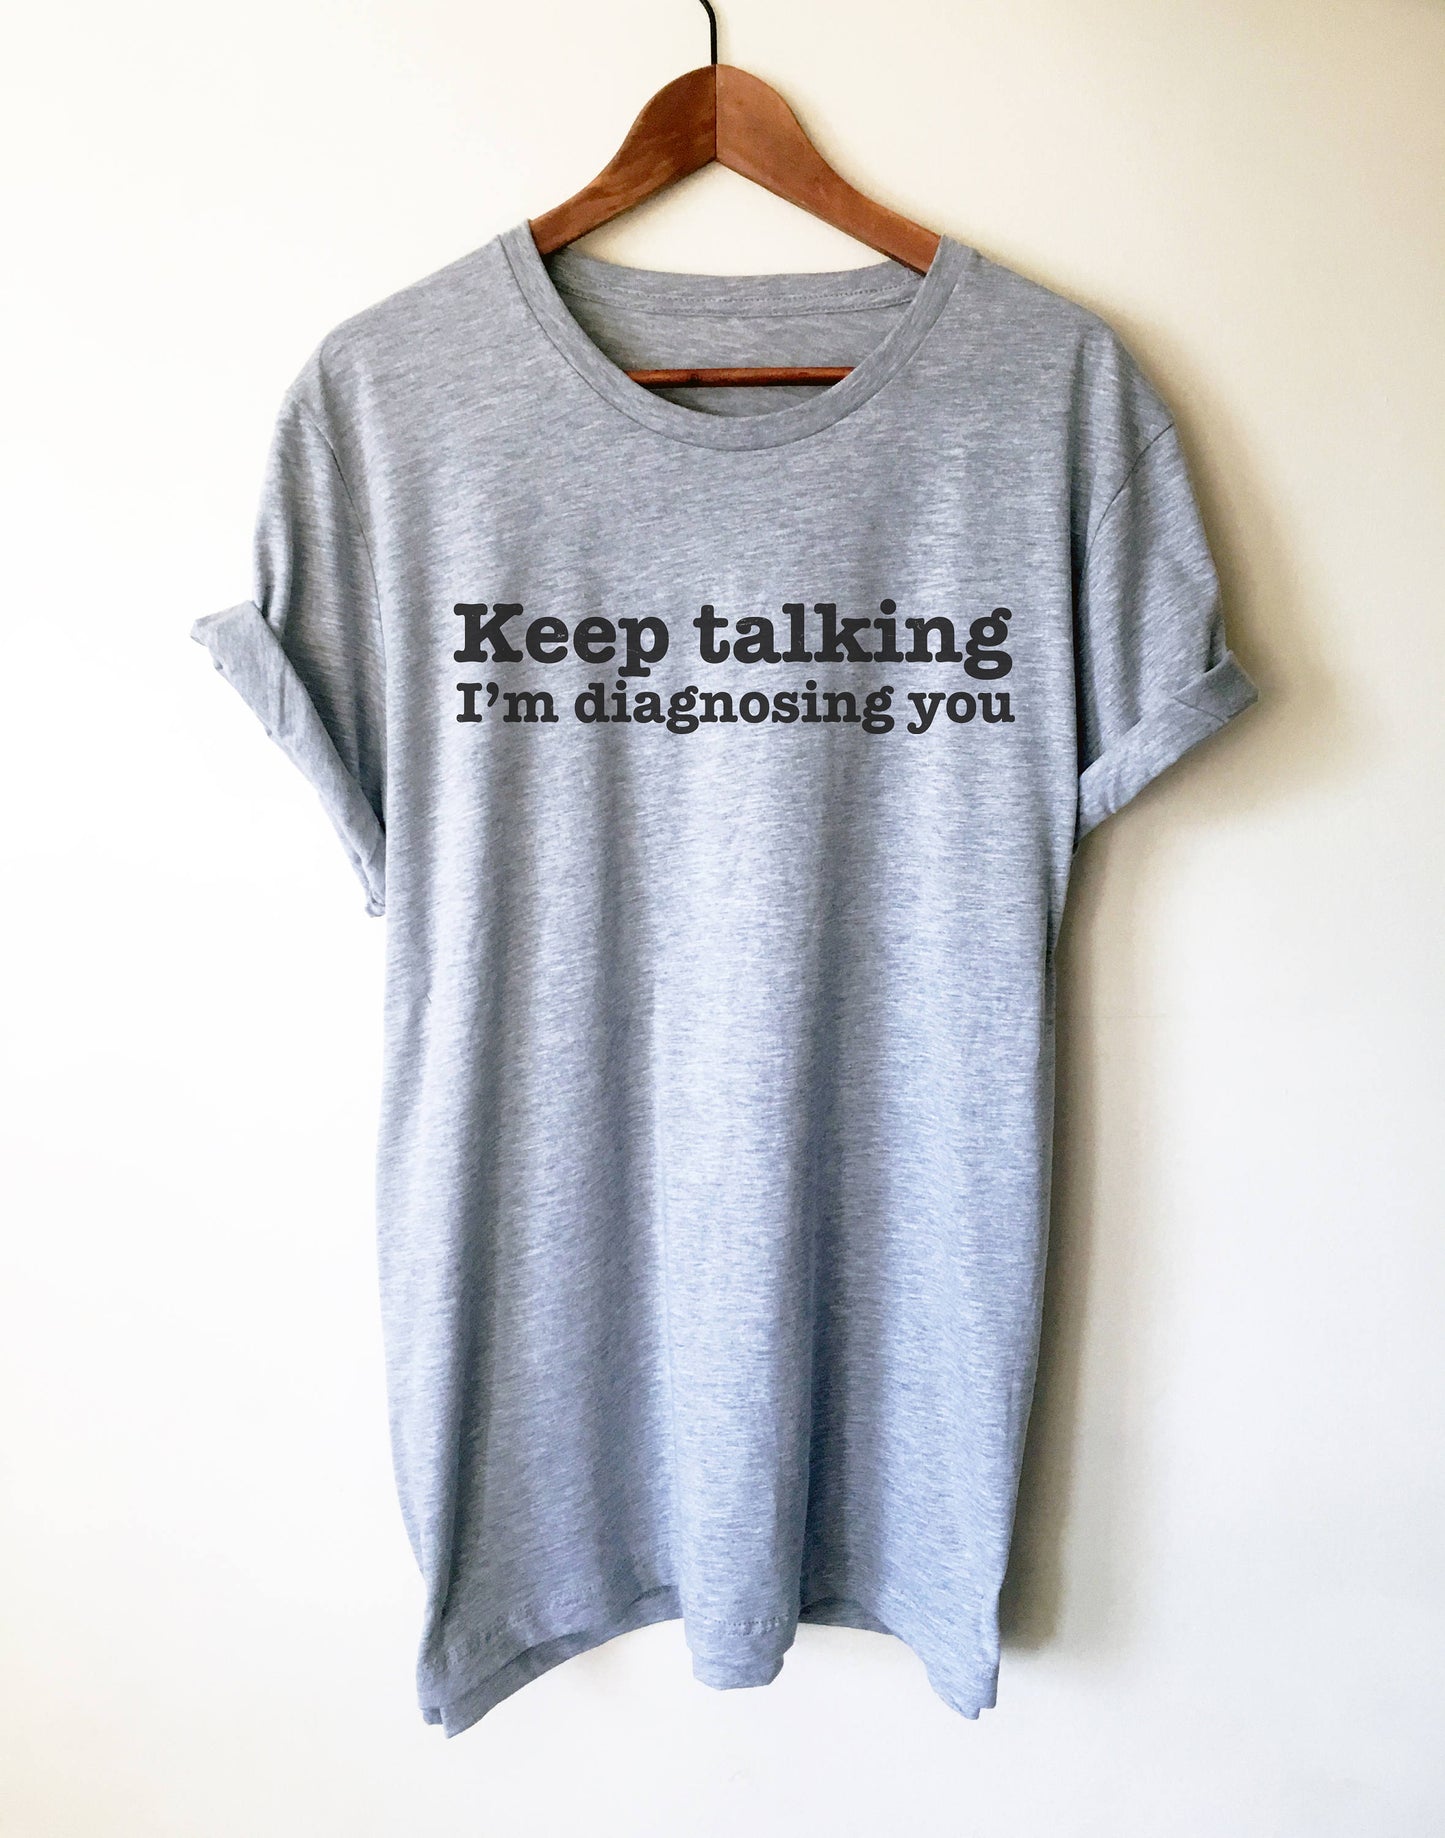 Keep Talking, I'm Diagnosing You Unisex Shirt - Psychologist gift, Psychologist t-shirt, Psychology shirt, psychiatrist shirt, Doctor shirt